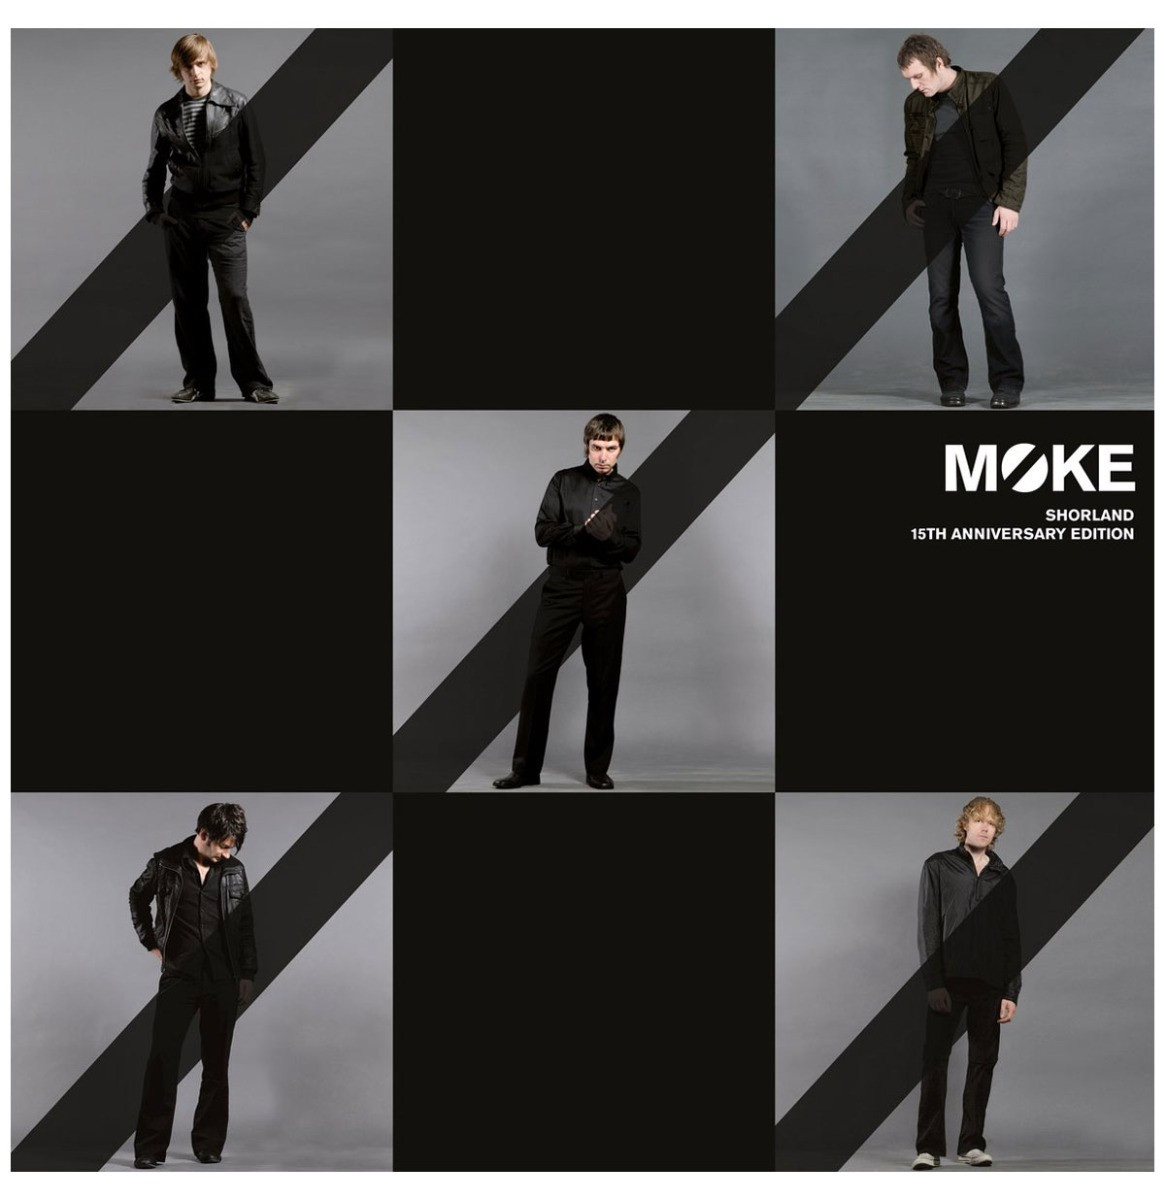 Moke - Shorland 15th Anniversary Edition LP